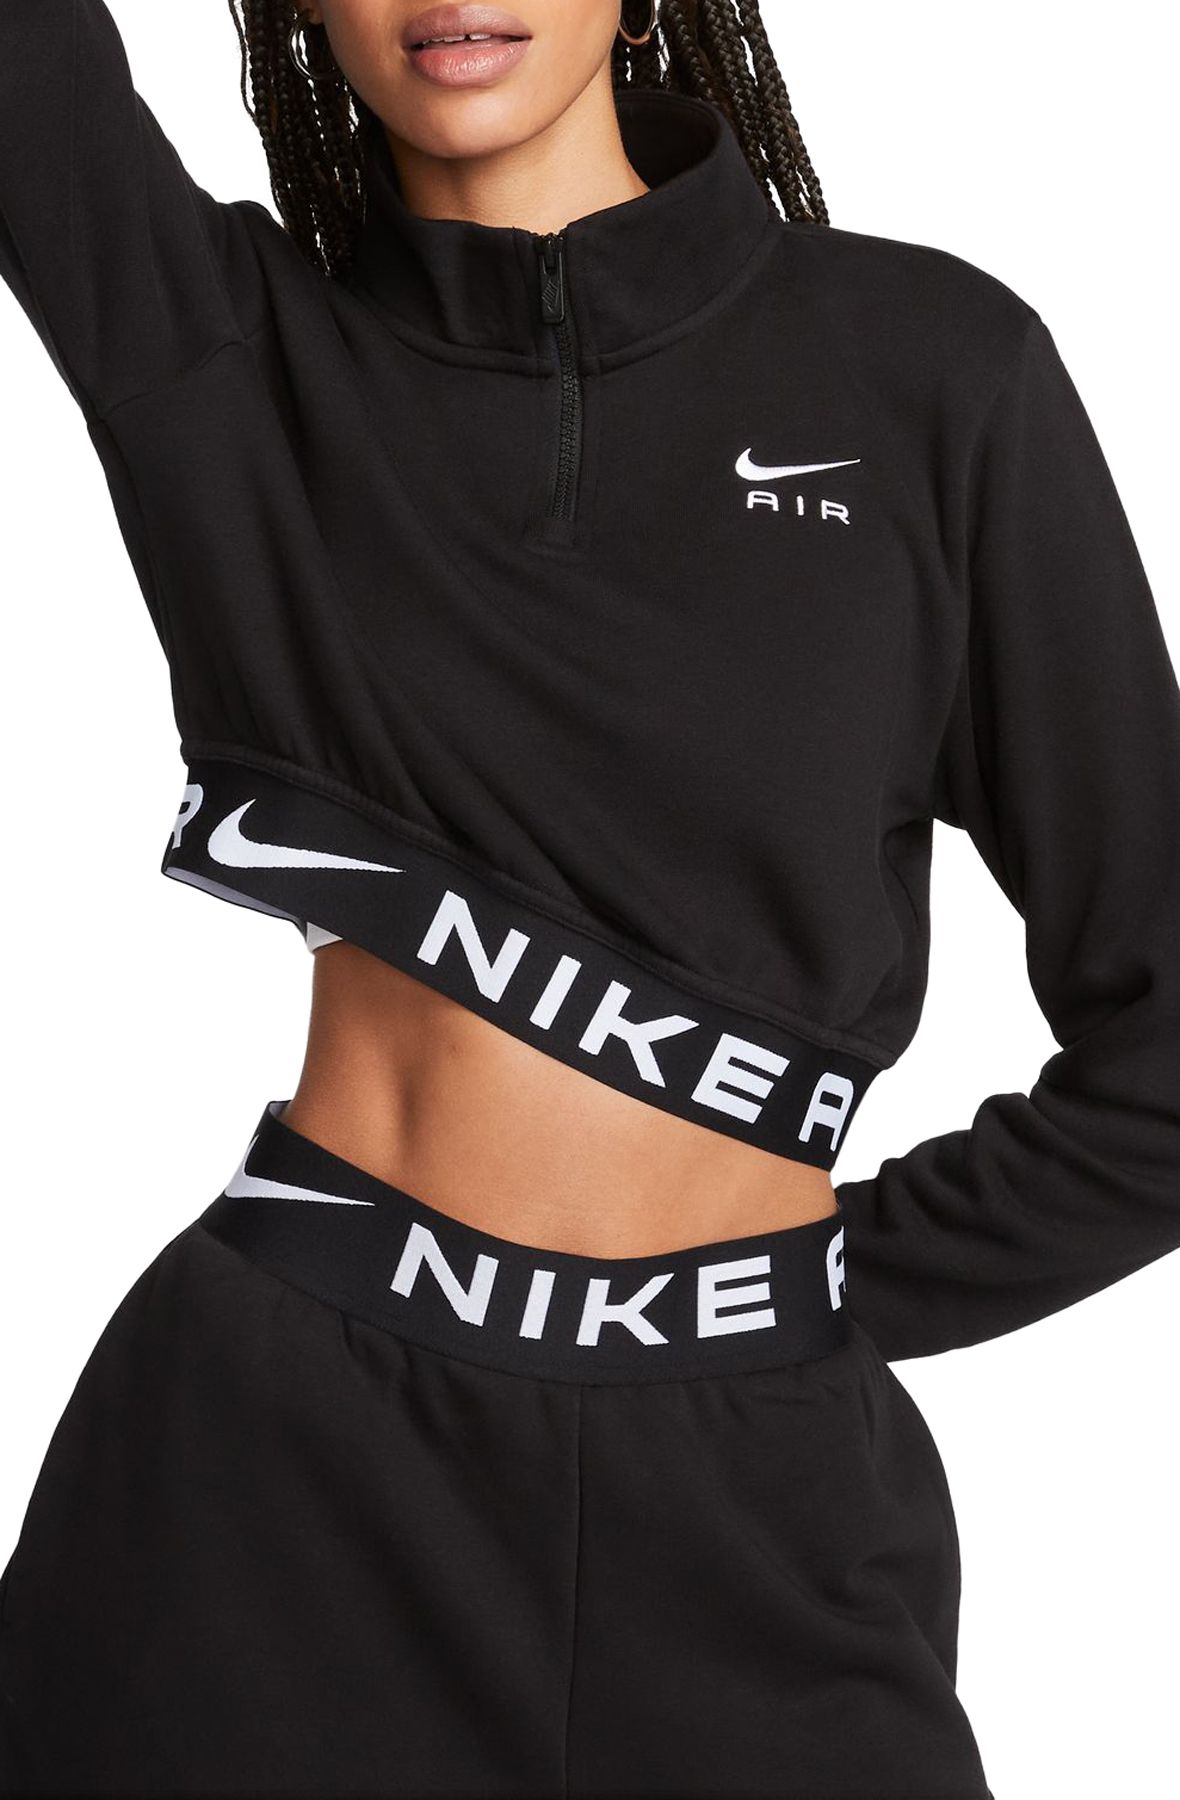 Best Deal for Nike Women's NSW Open Hem Fleece Pant Varsity (Small